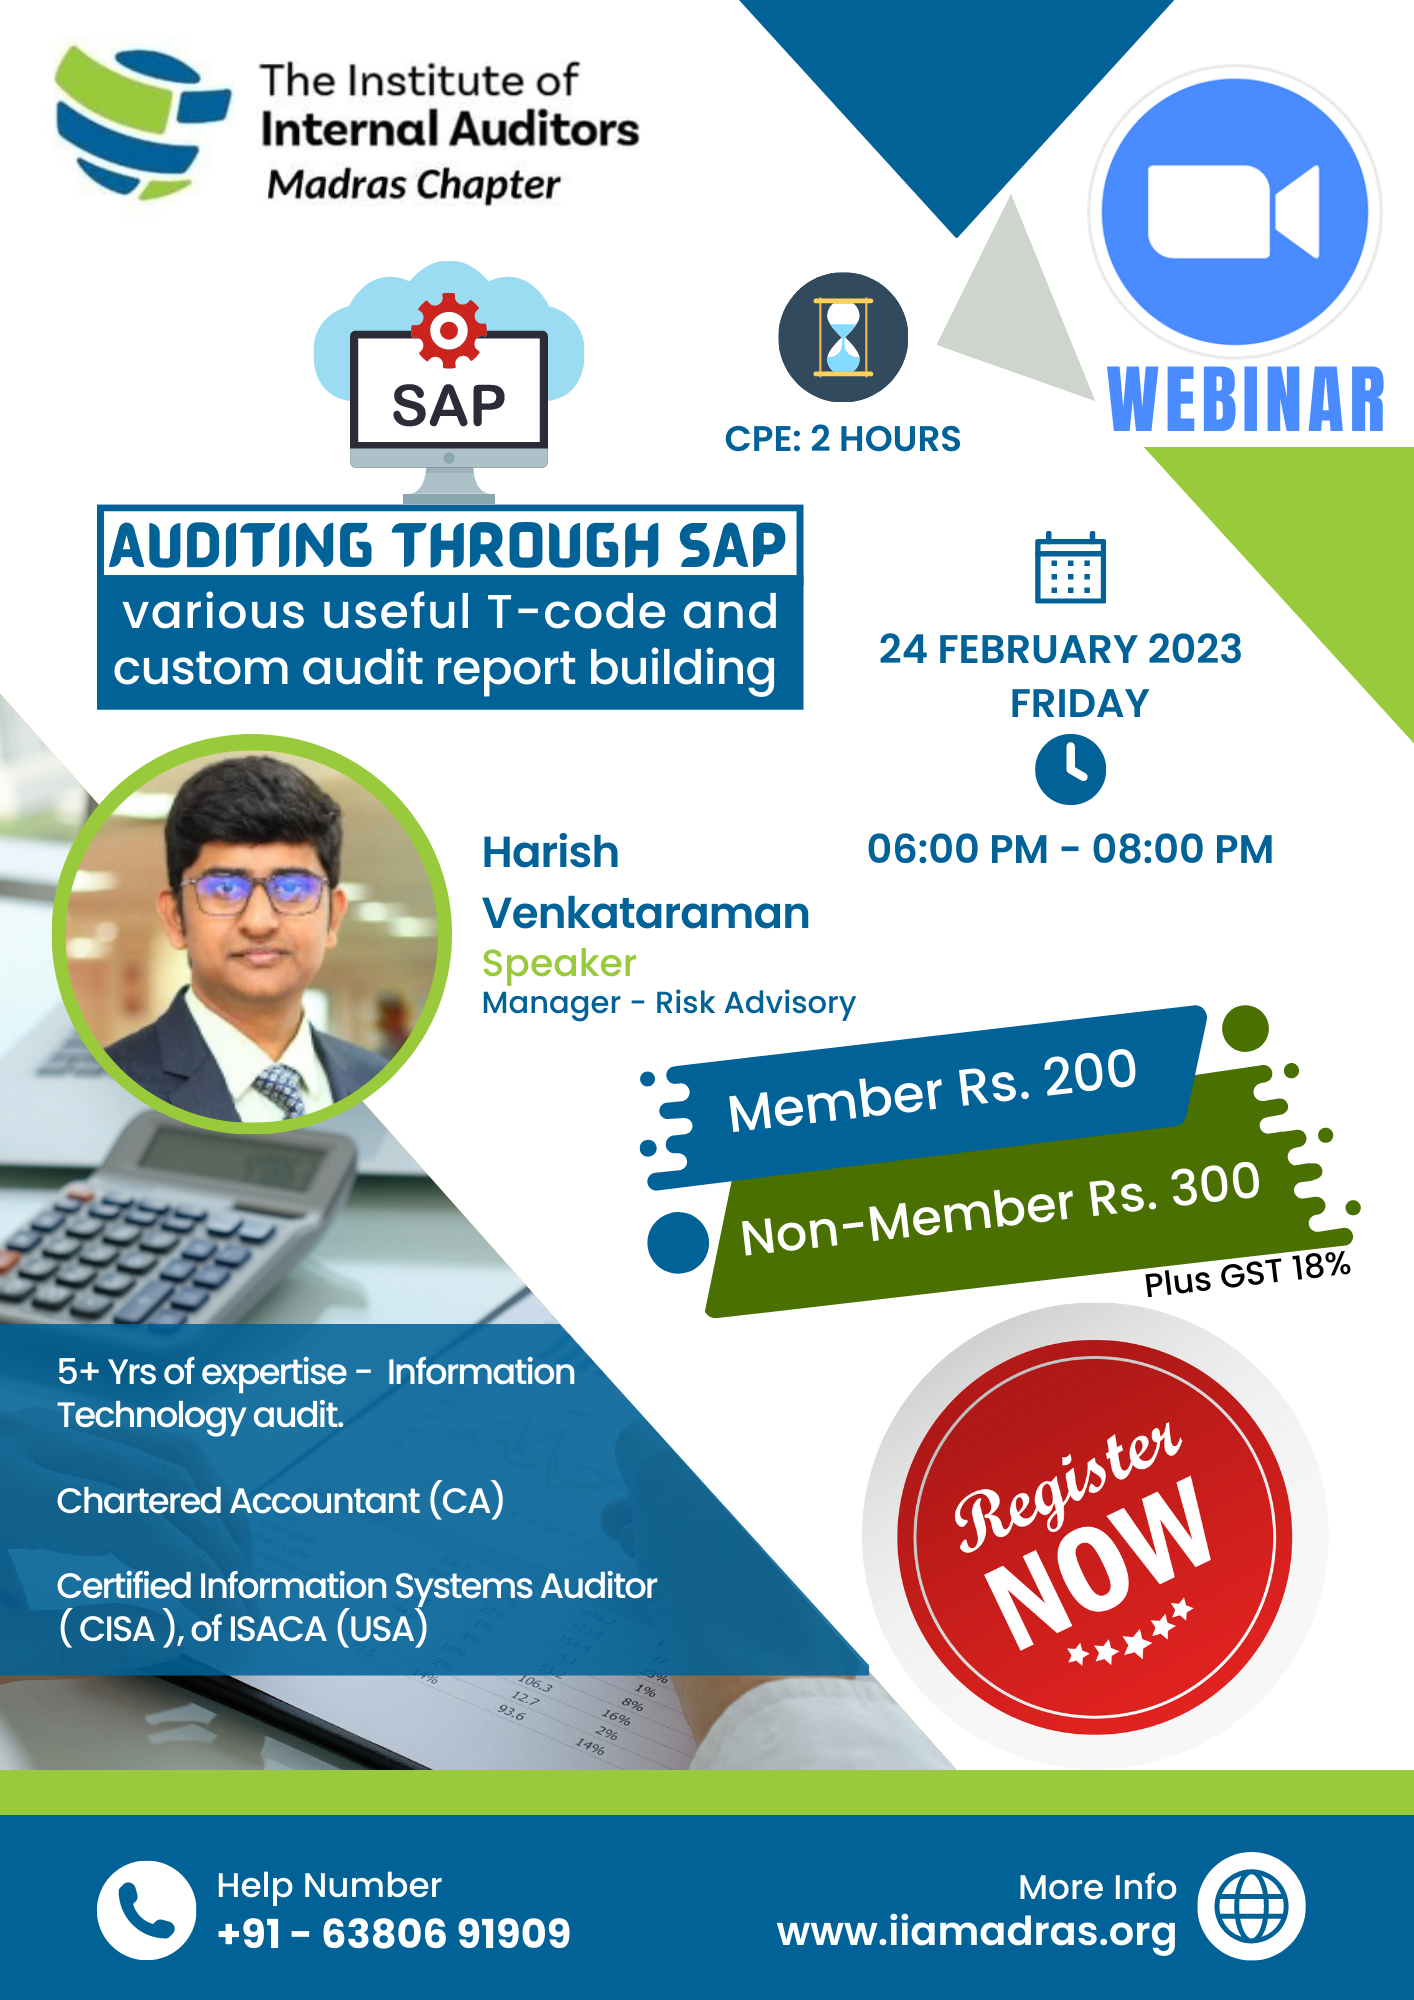 Auditing through SAP - various useful T-code and custom audit report building